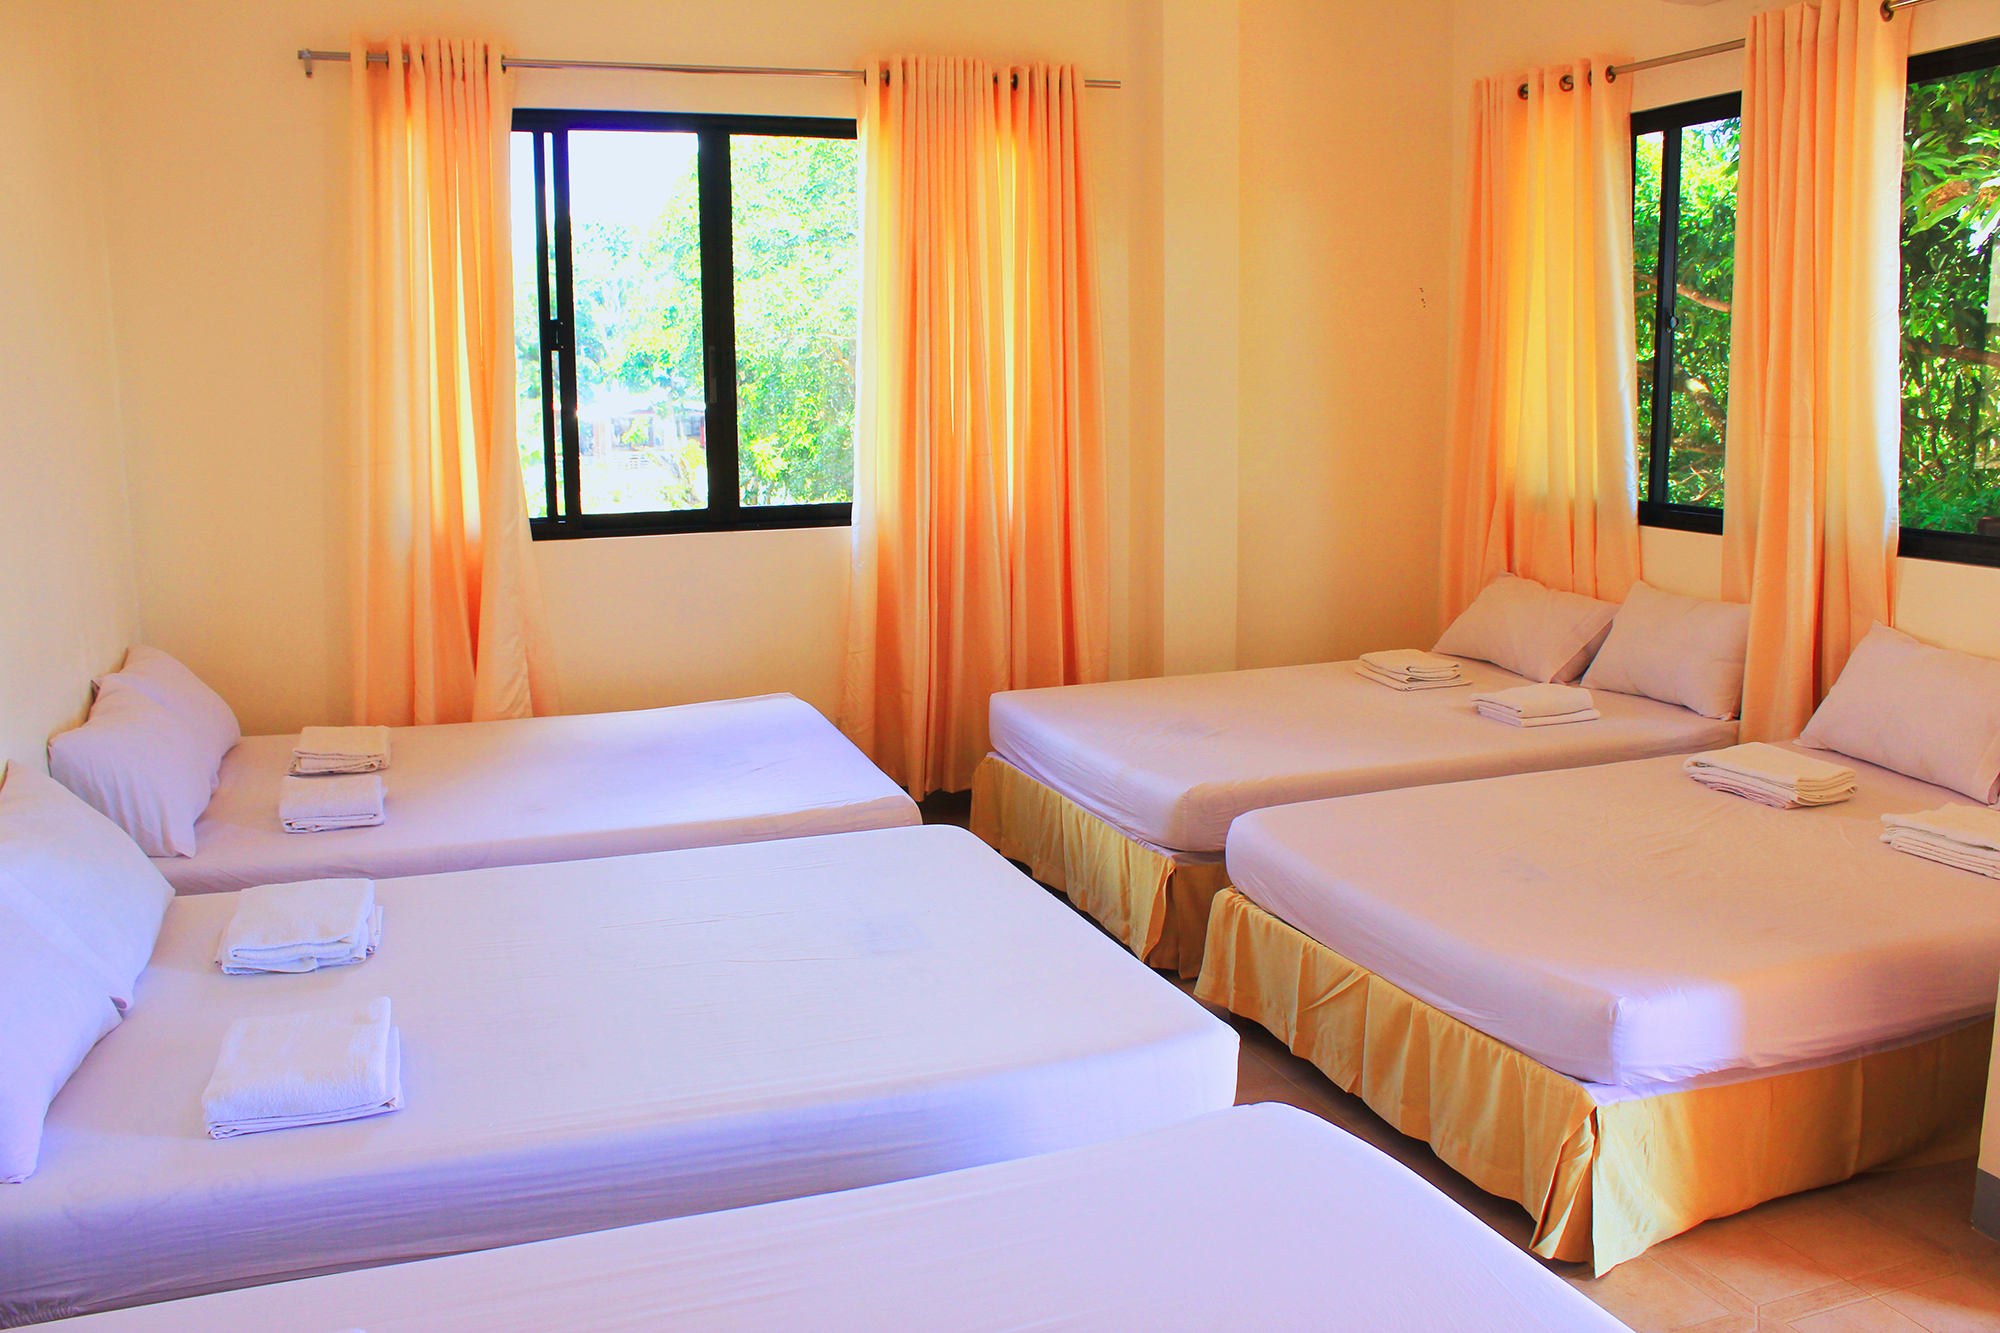 Bakasyunan Resort and Conference Center - Tanay | Rates